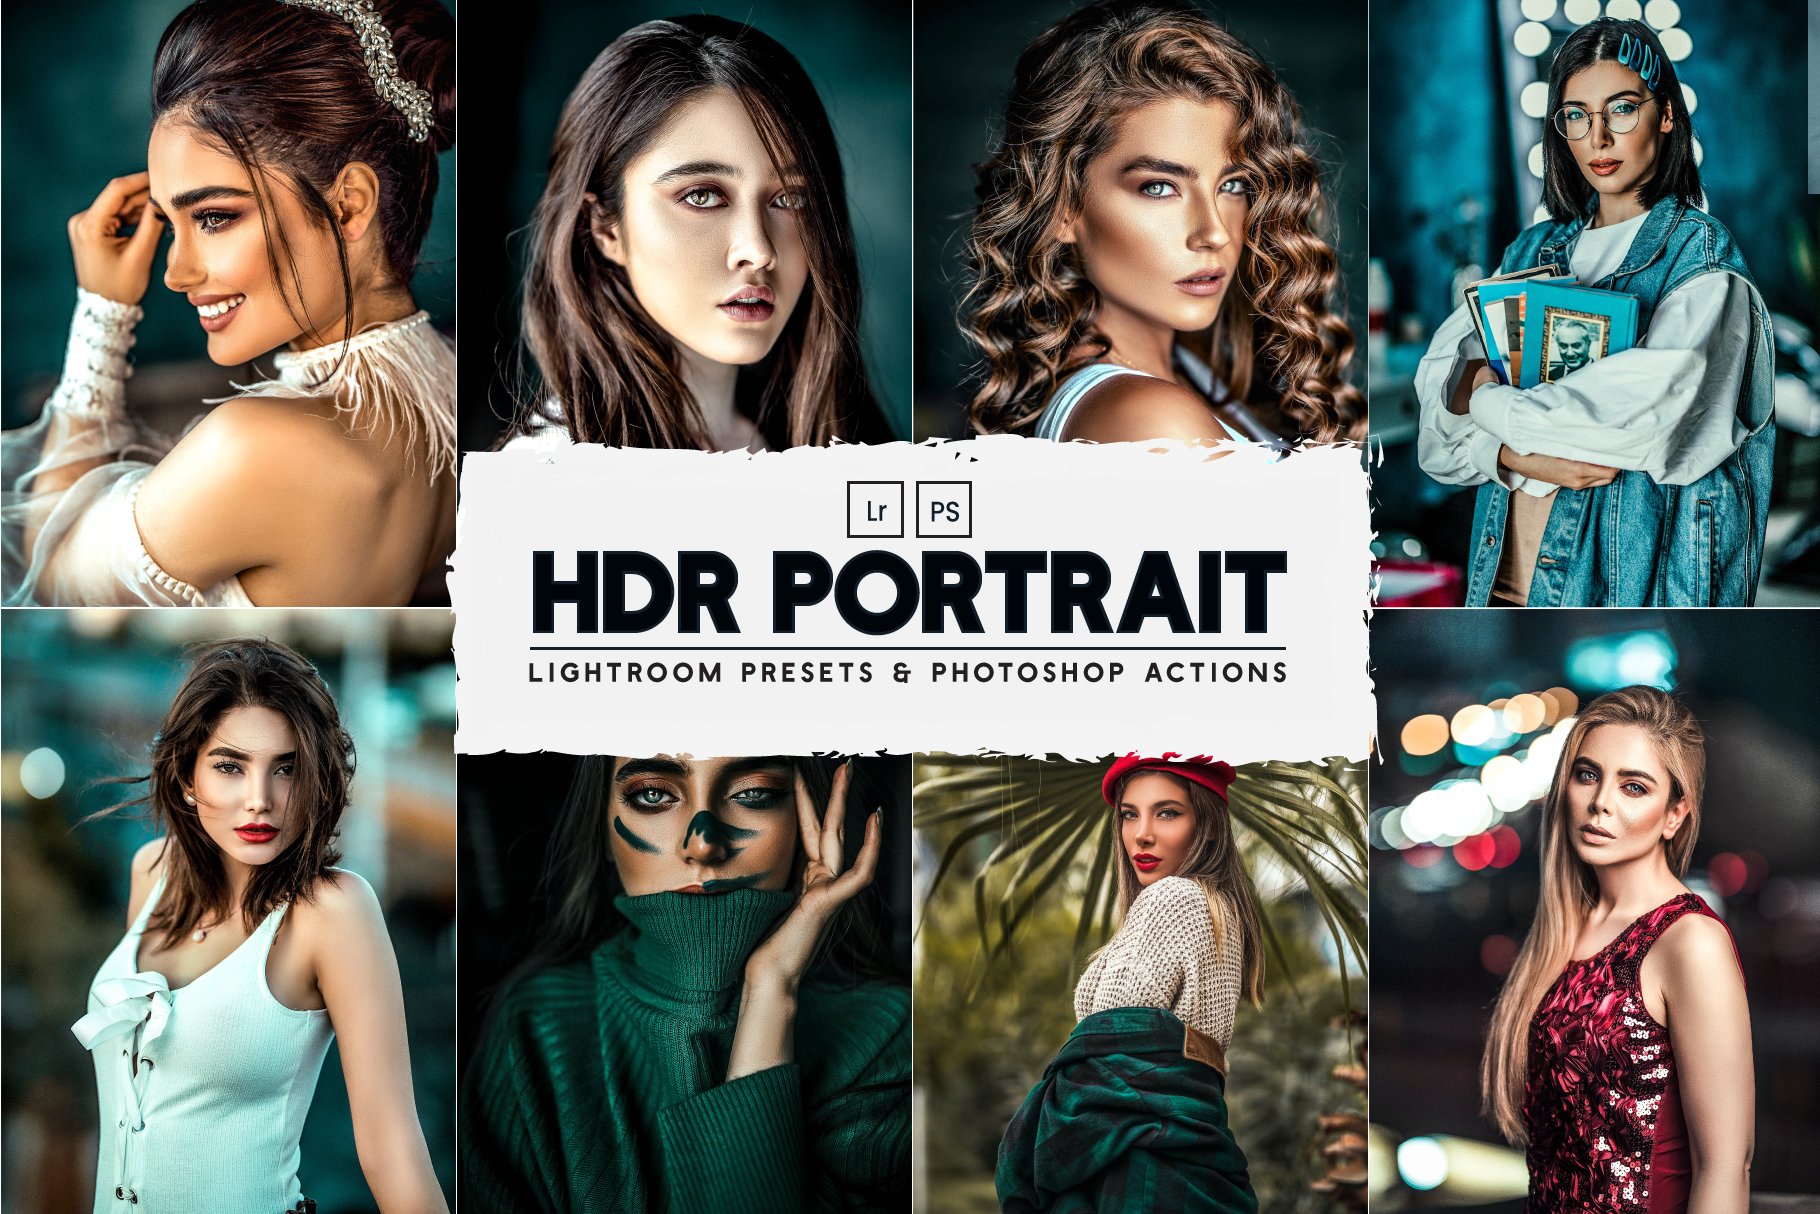 HDR Portrait Lr Presets & Ps Actionscover image.